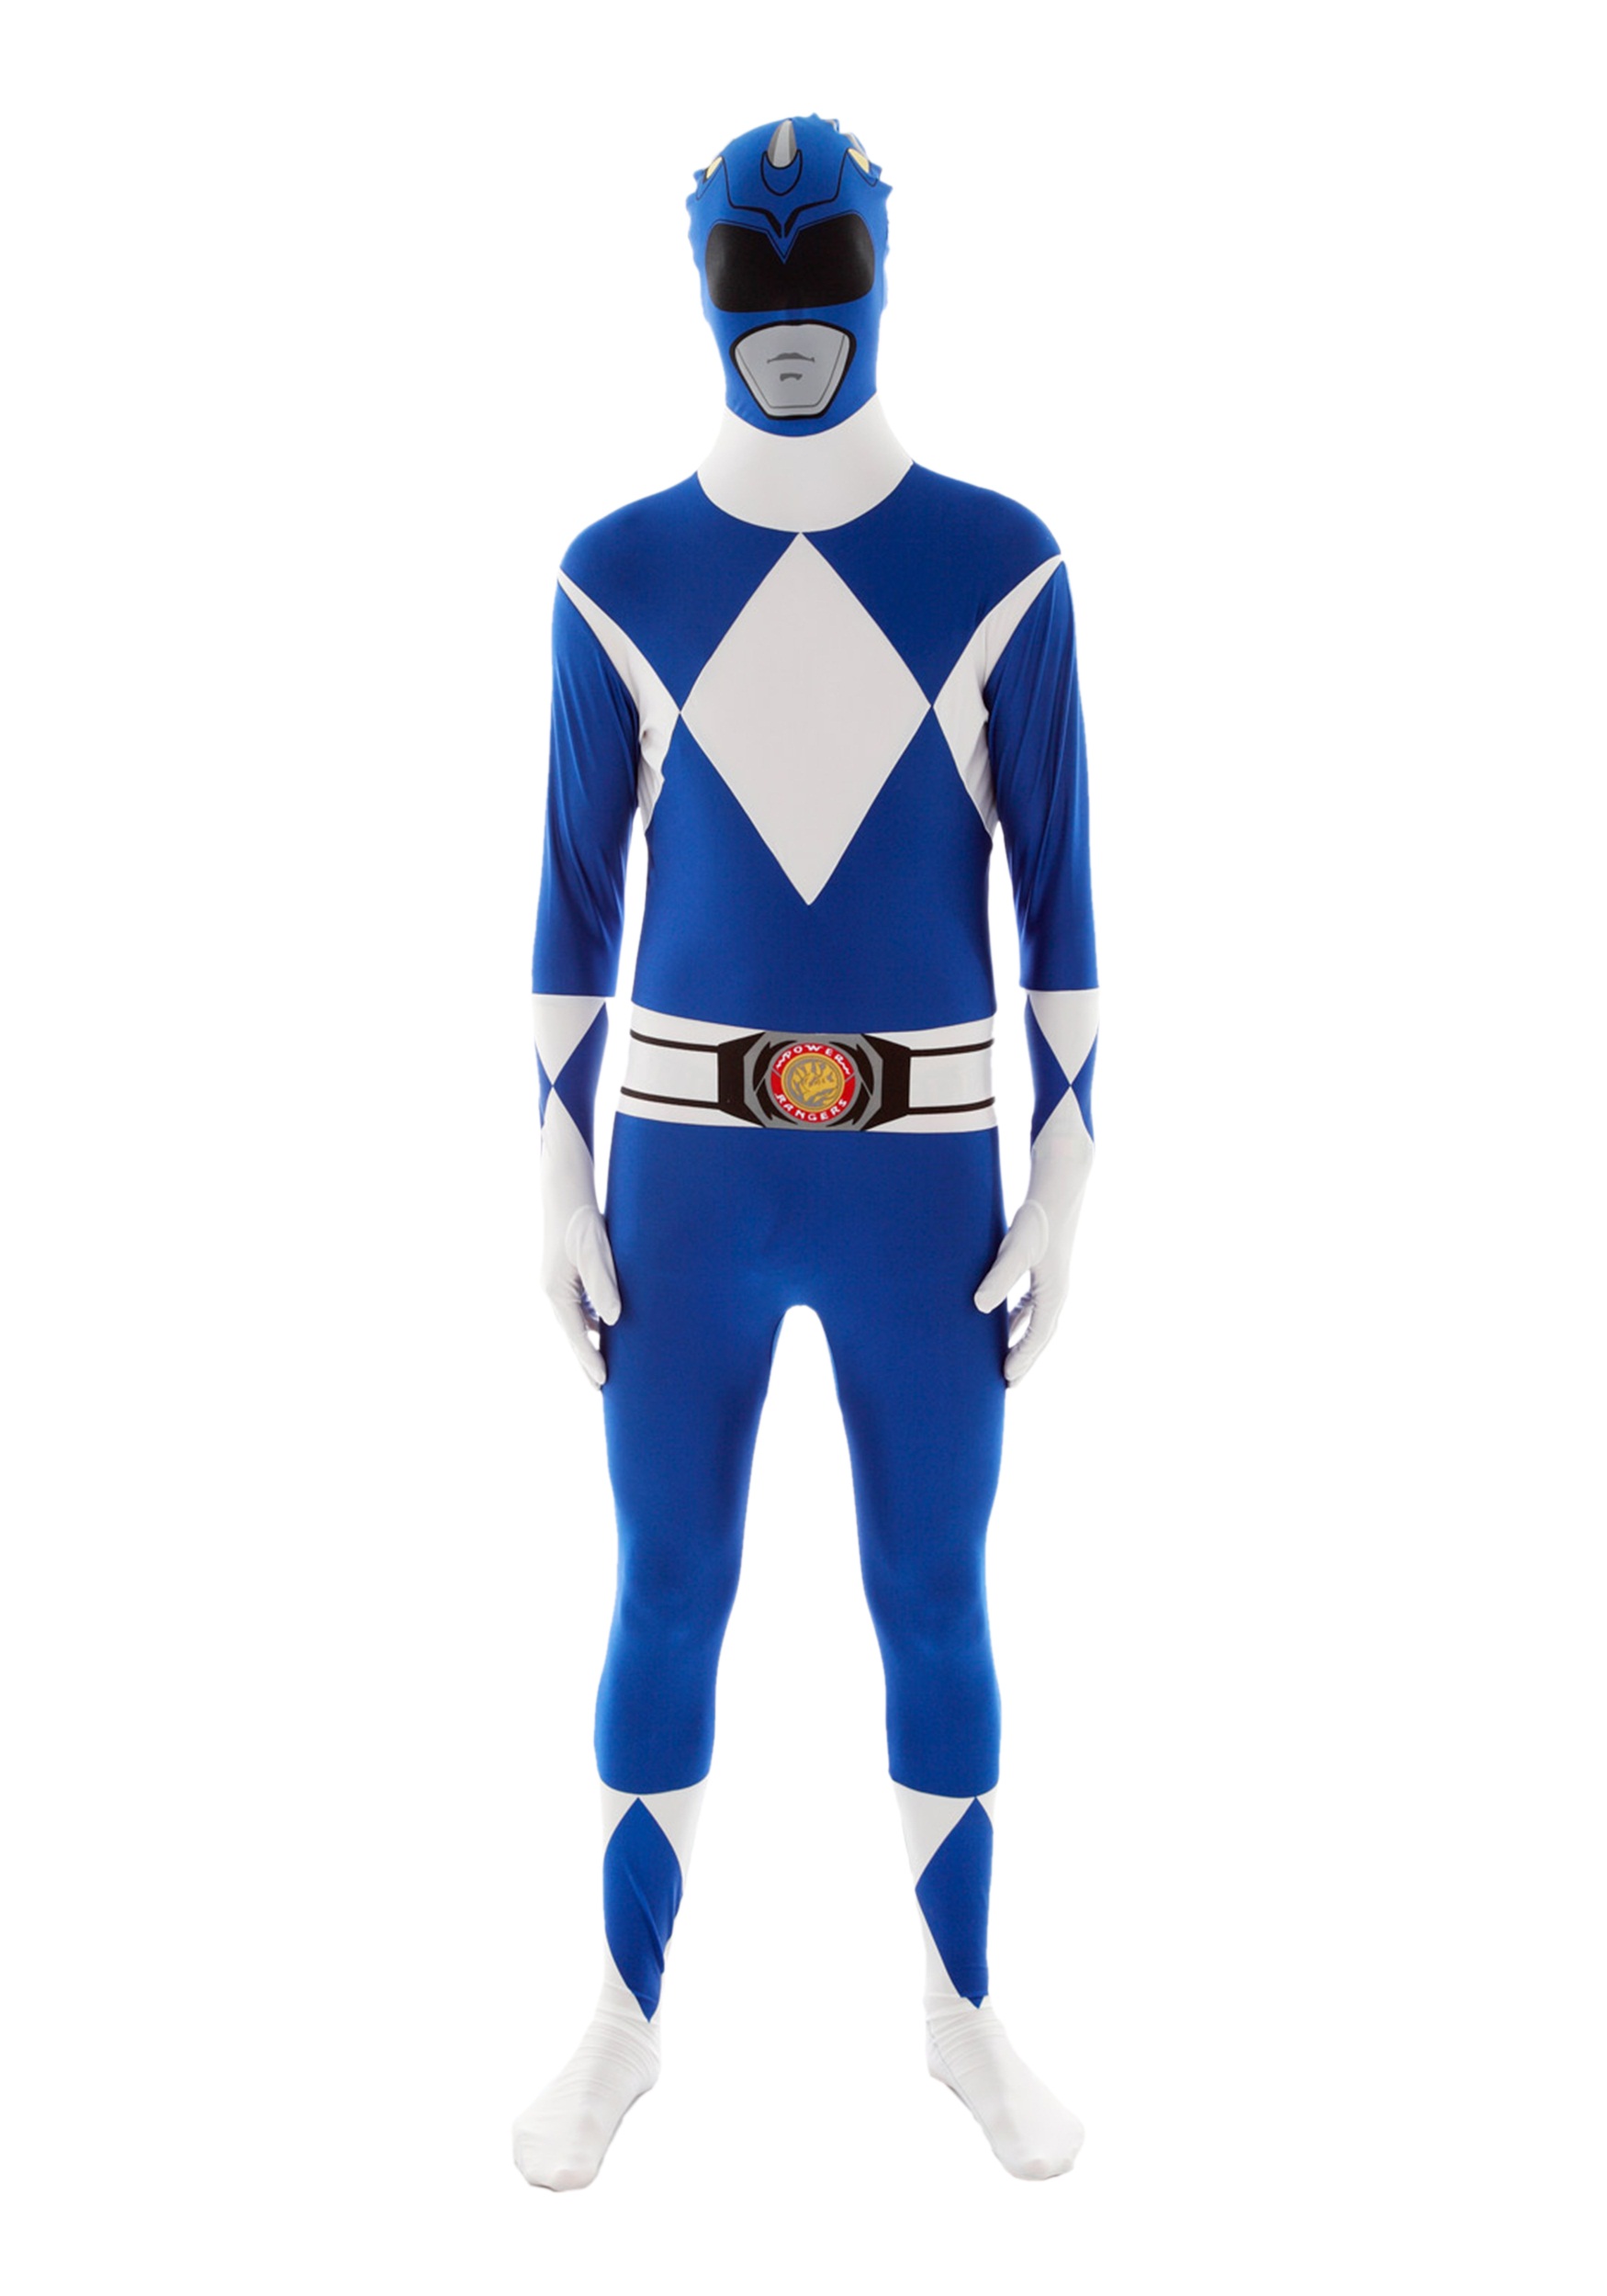 Photos - Fancy Dress Power Morphsuits  Rangers: Blue Ranger Morphsuit Costume Blue/White MPM 